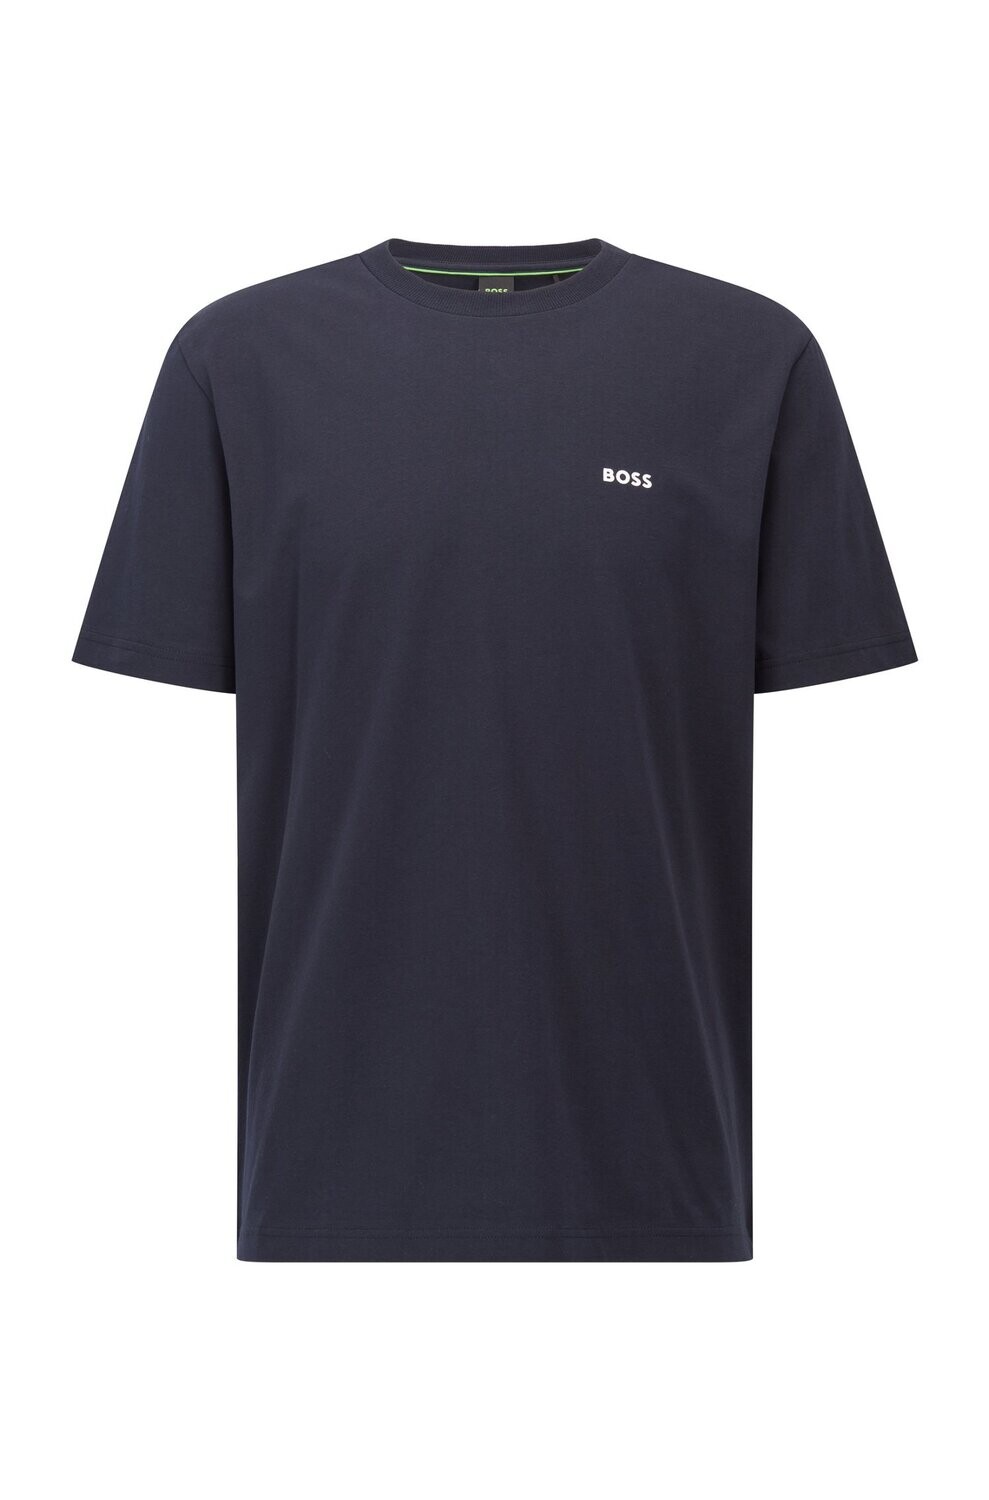 Hugo Boss Tee T-Shirt